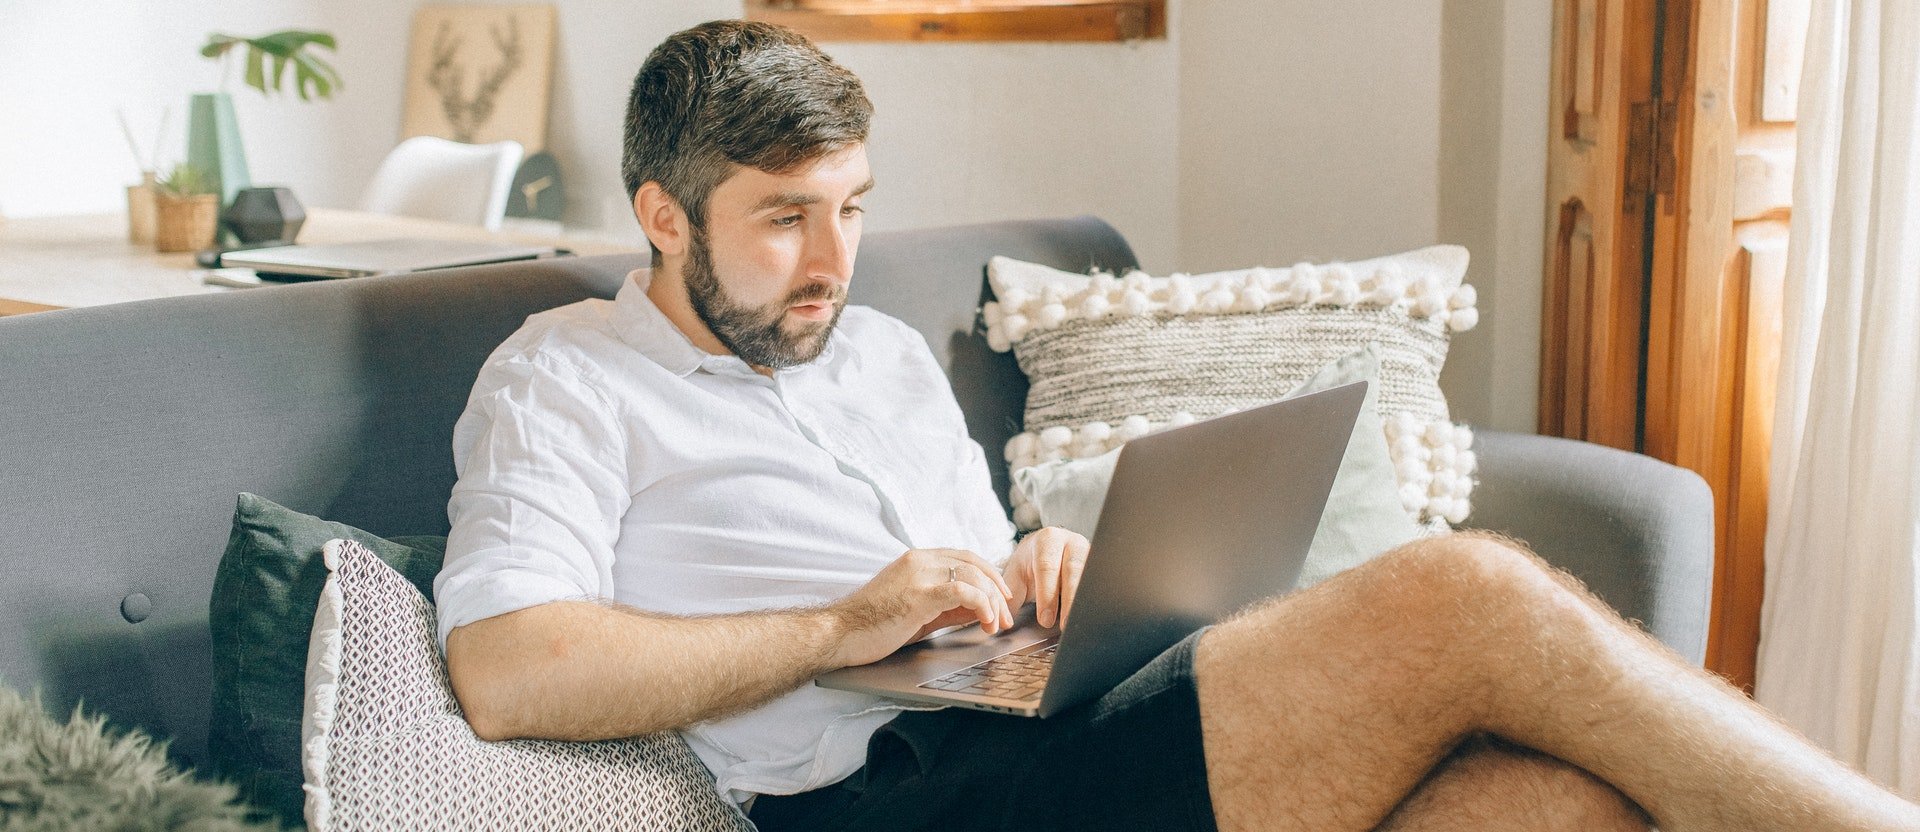 Man watching videos with laptop